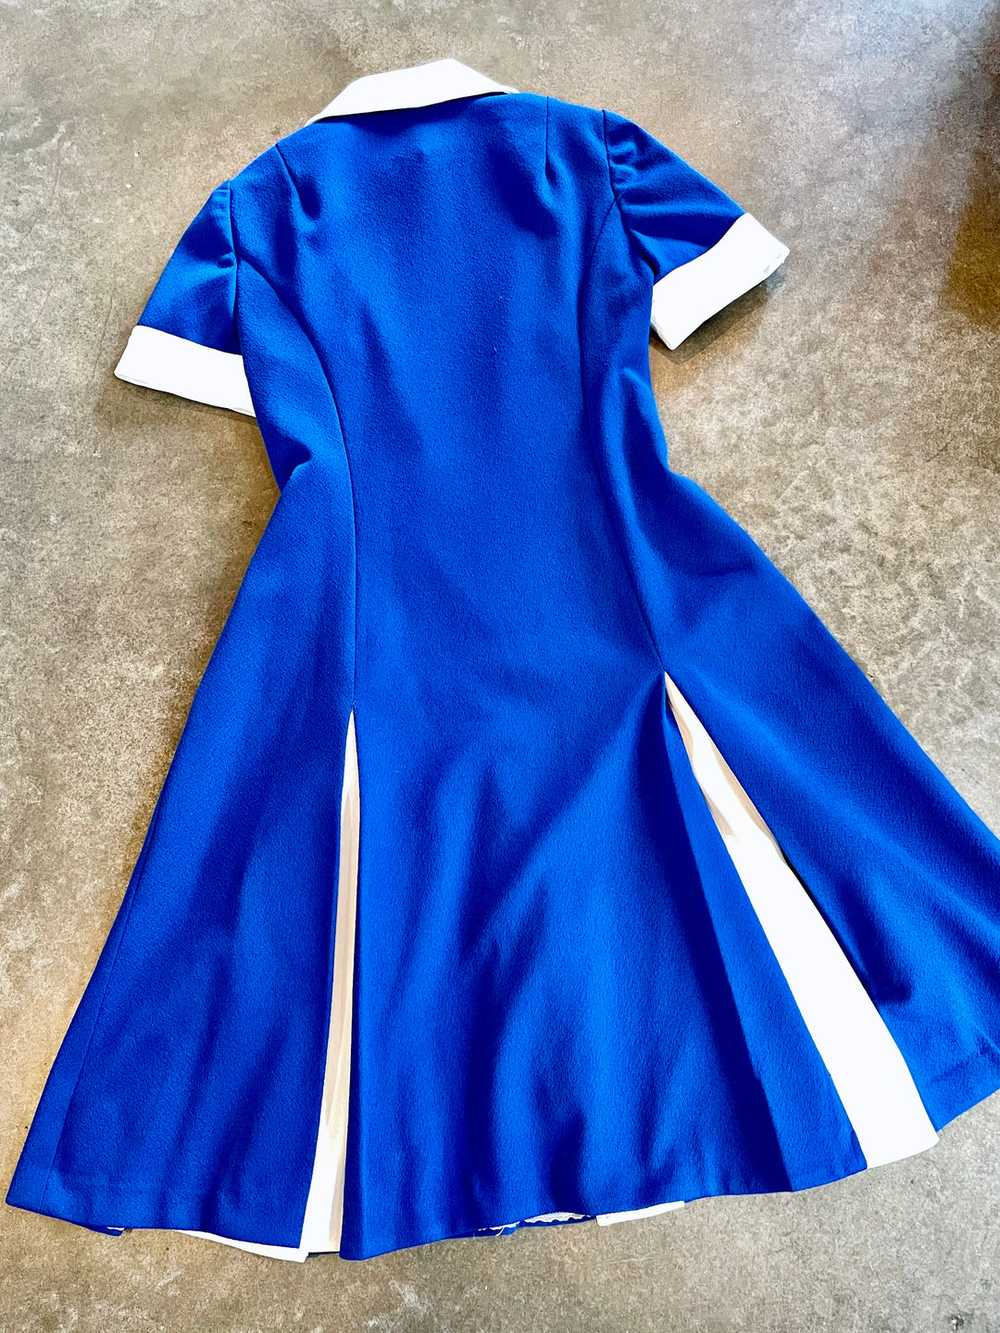 Vintage Mod Blue & White Dress - image 2